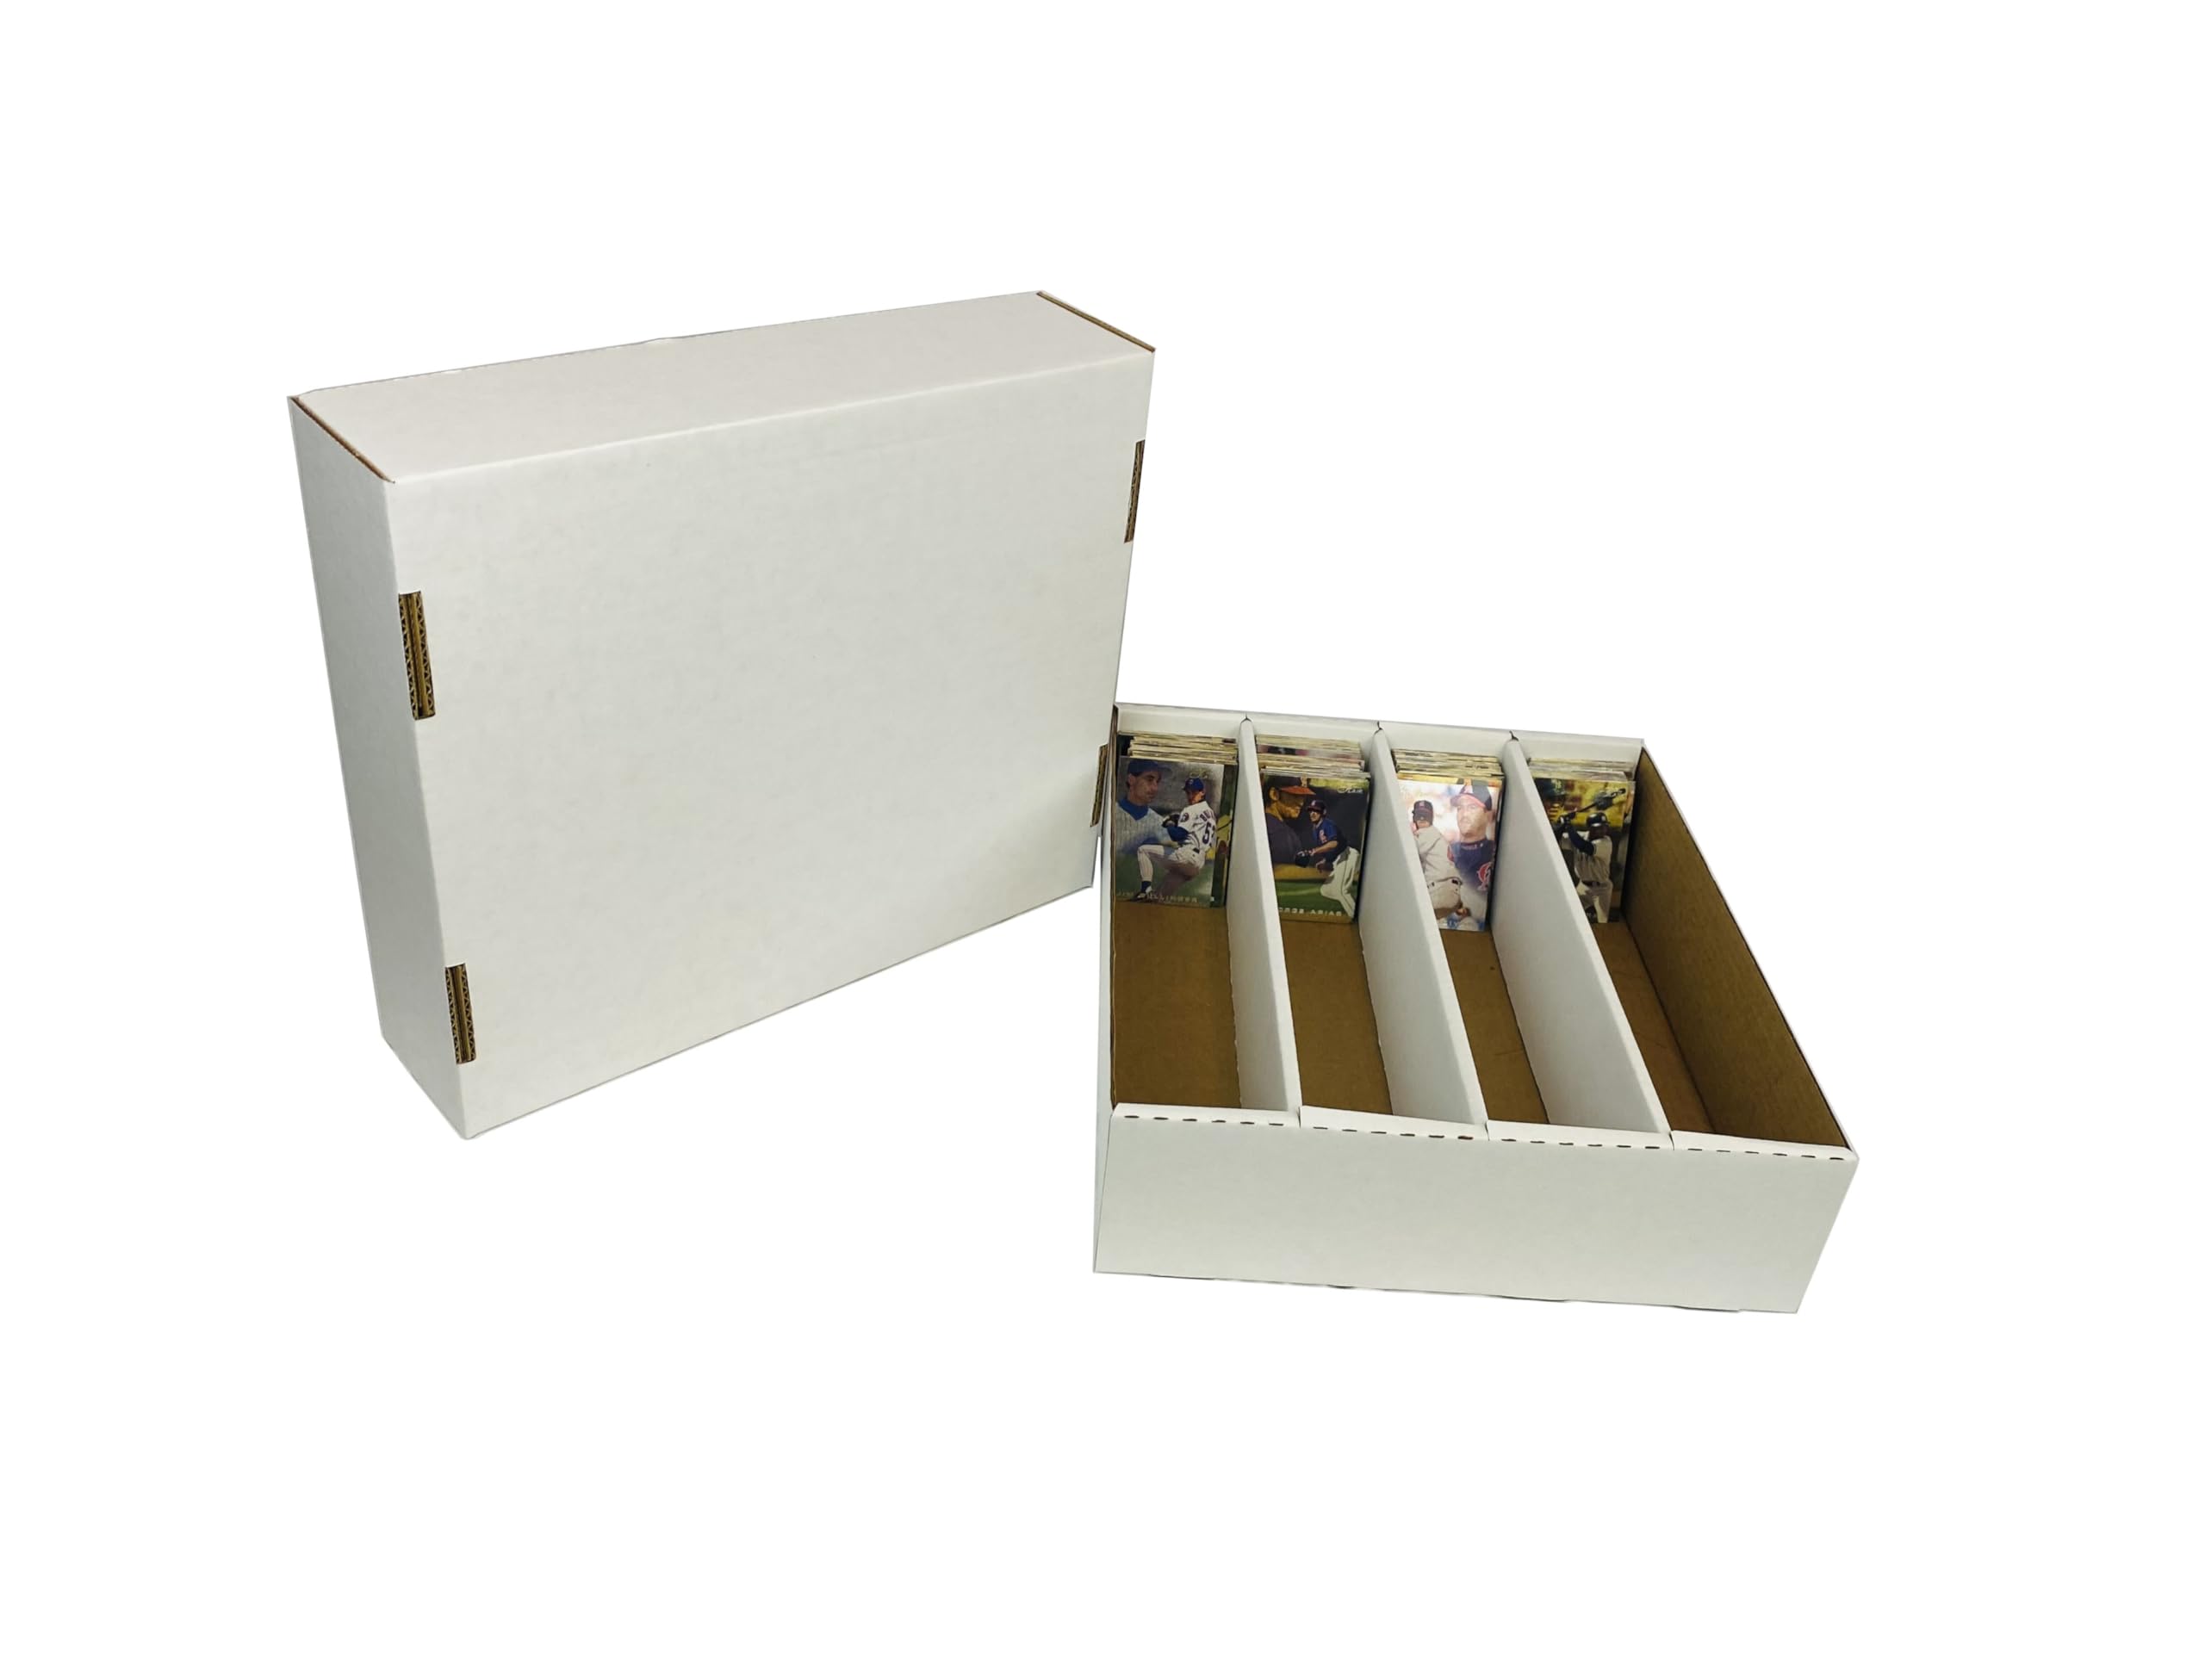 3) Max Protection 4 Row Trading card Storage Box - Durable